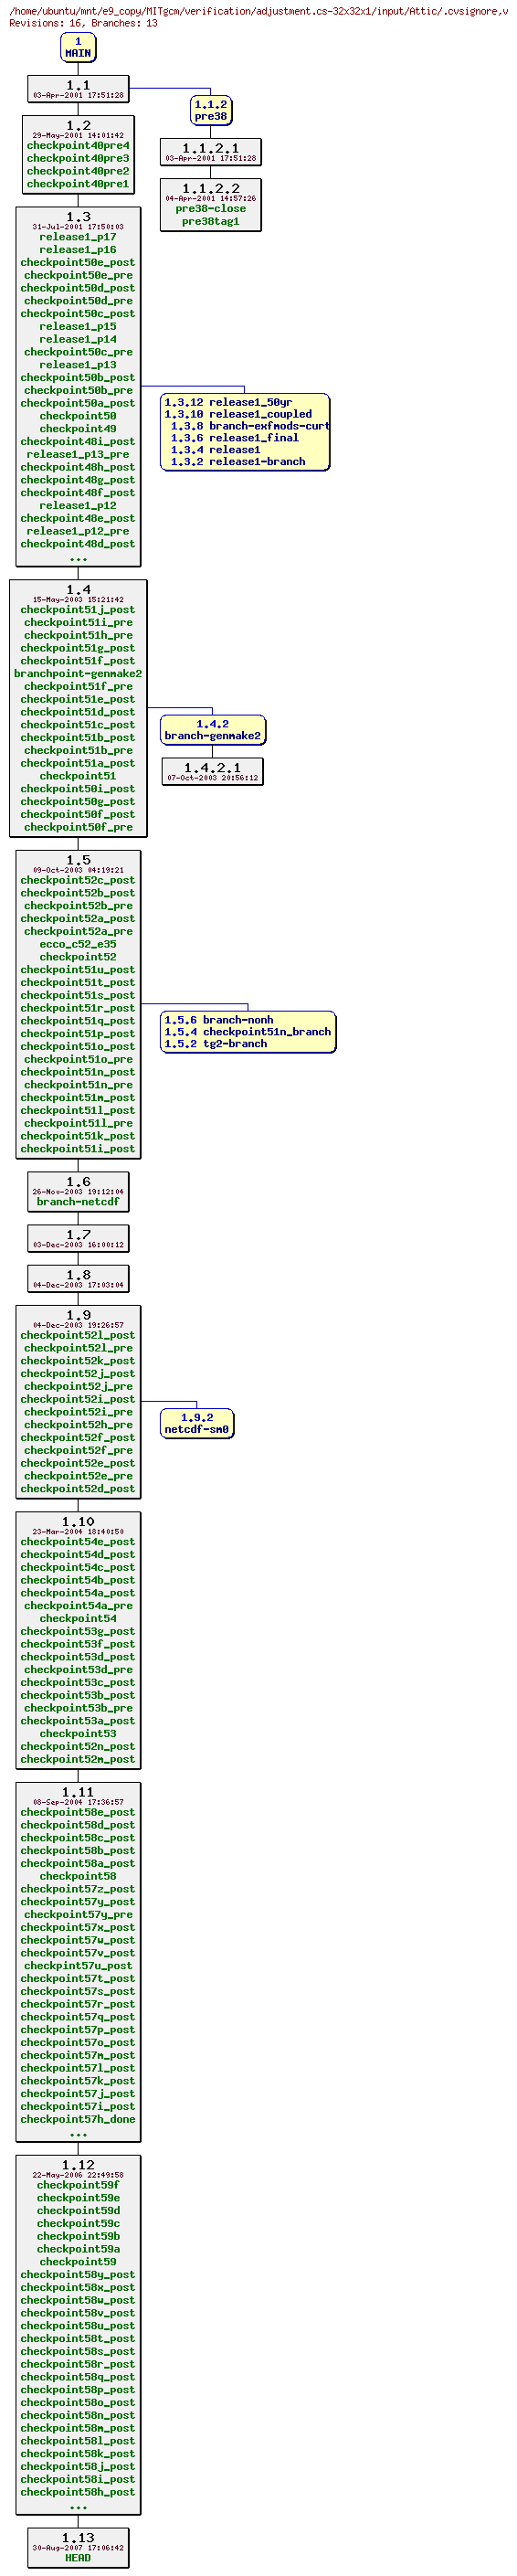 Revisions of MITgcm/verification/adjustment.cs-32x32x1/input/.cvsignore